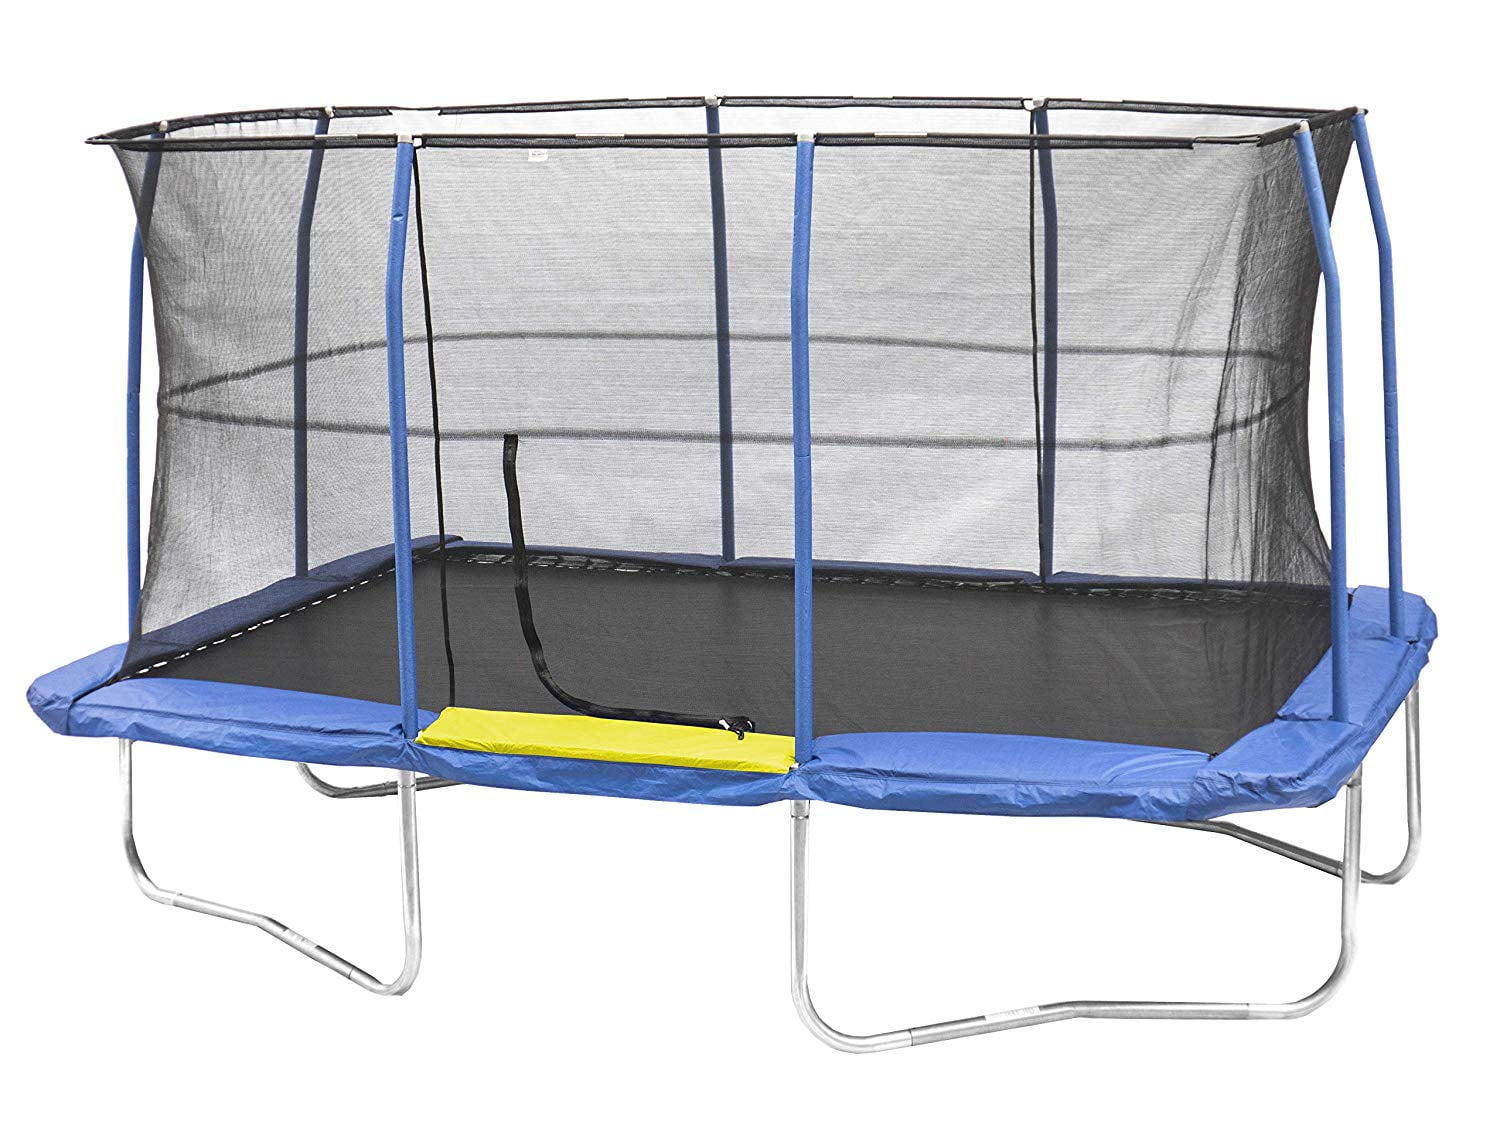 JumpKing Rectangular 10' x 15' Trampoline, with Enclosure, Blue/Yellow